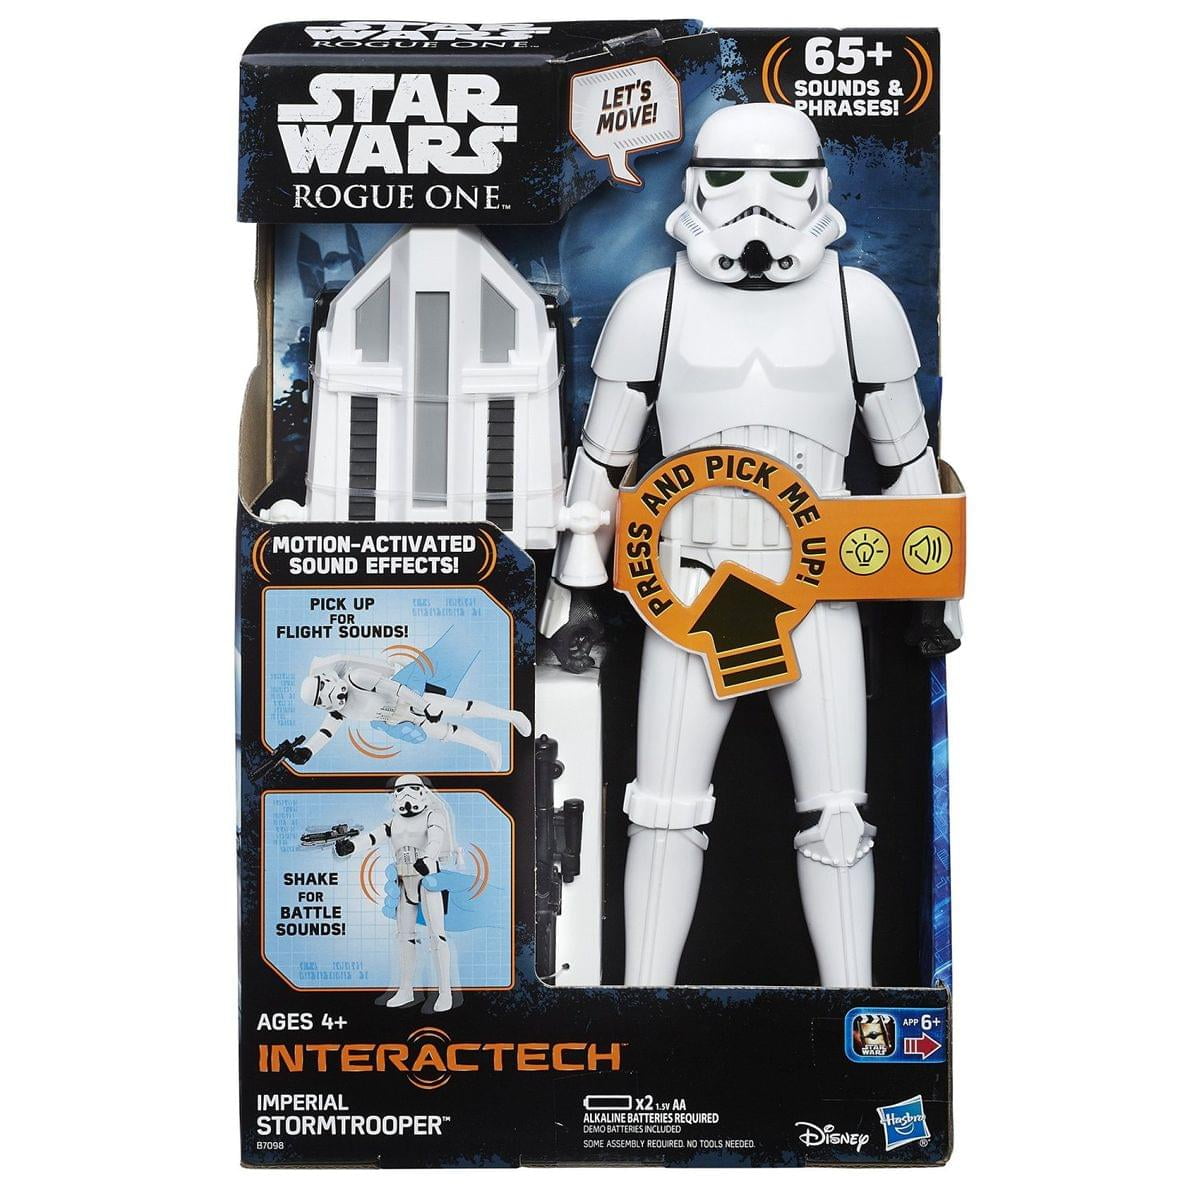 2018 Star Wars Last Jedi R2-D2 Titan Hero Action Figure Walmart Exclusive Sealed 